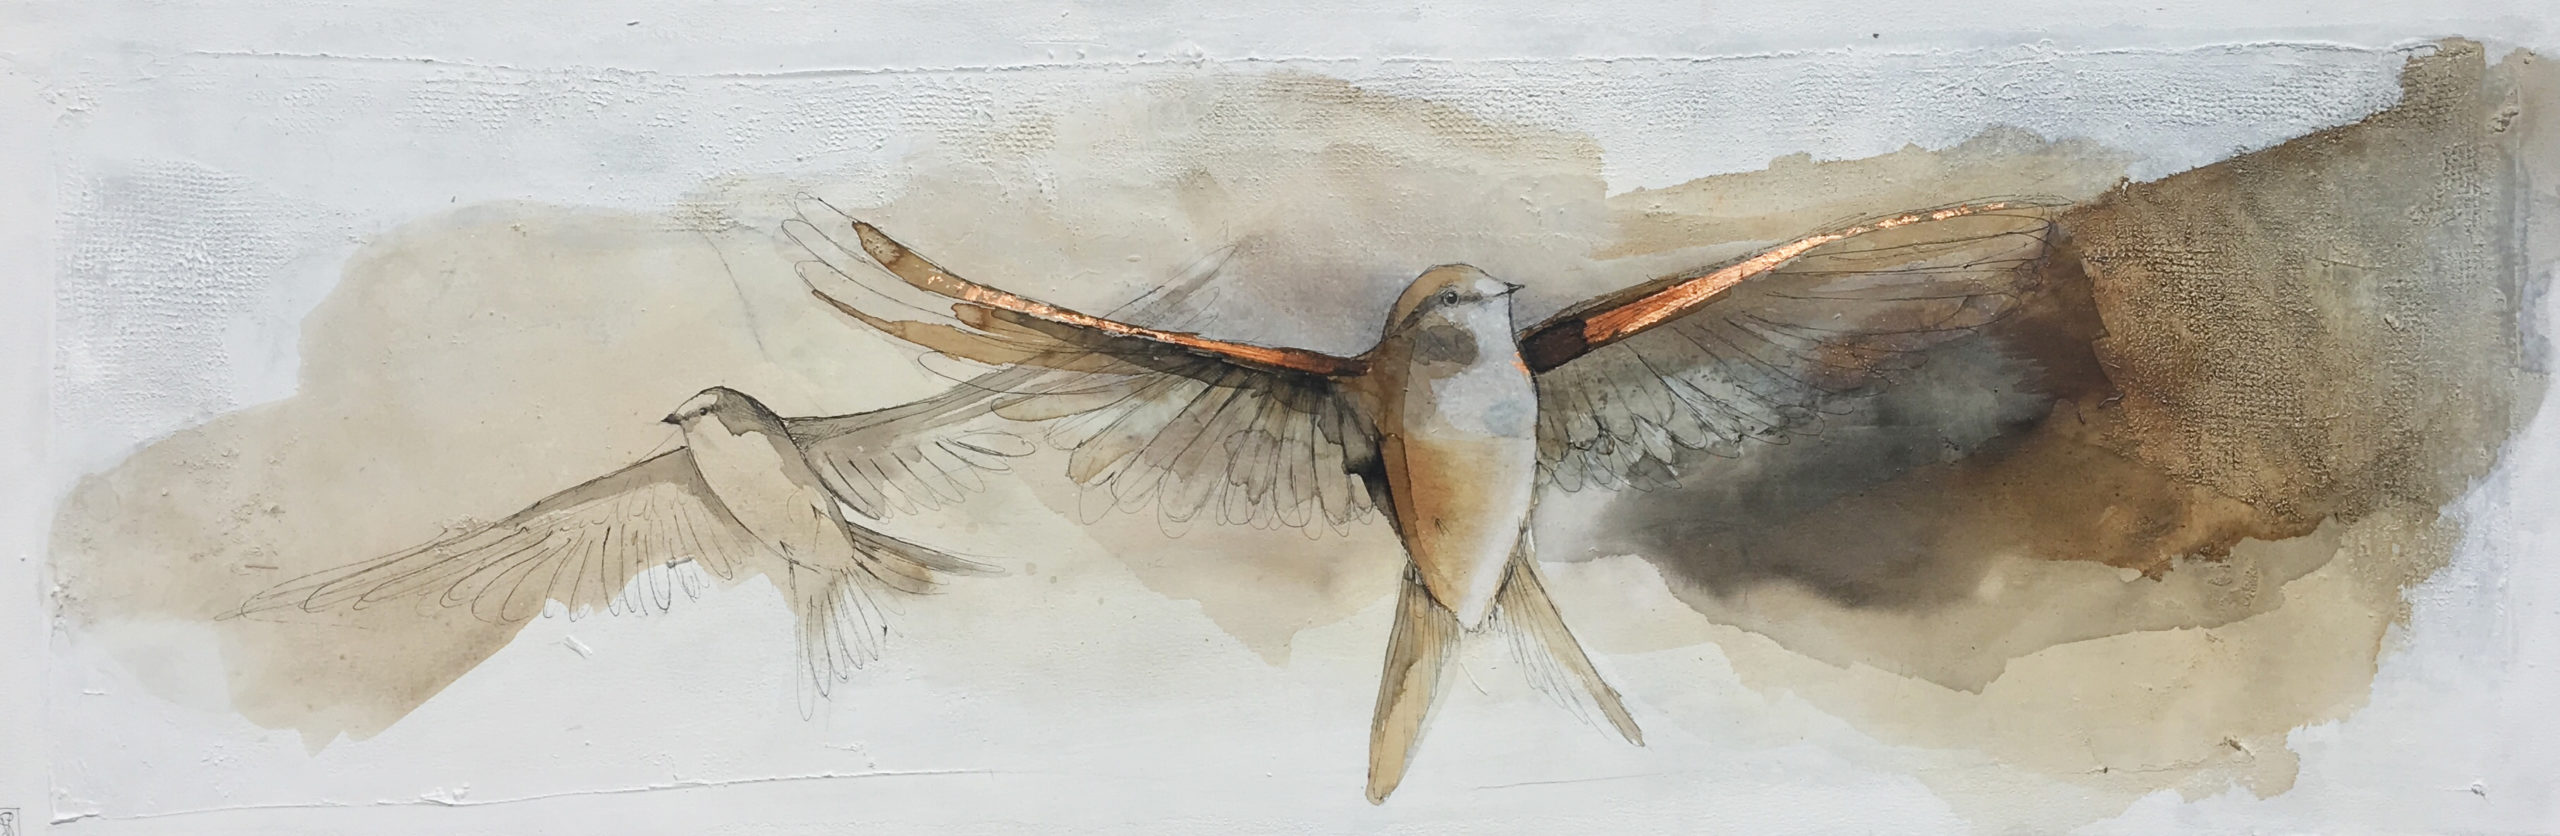 Vicky Sanders Abstract Figurative - Birds in Flight